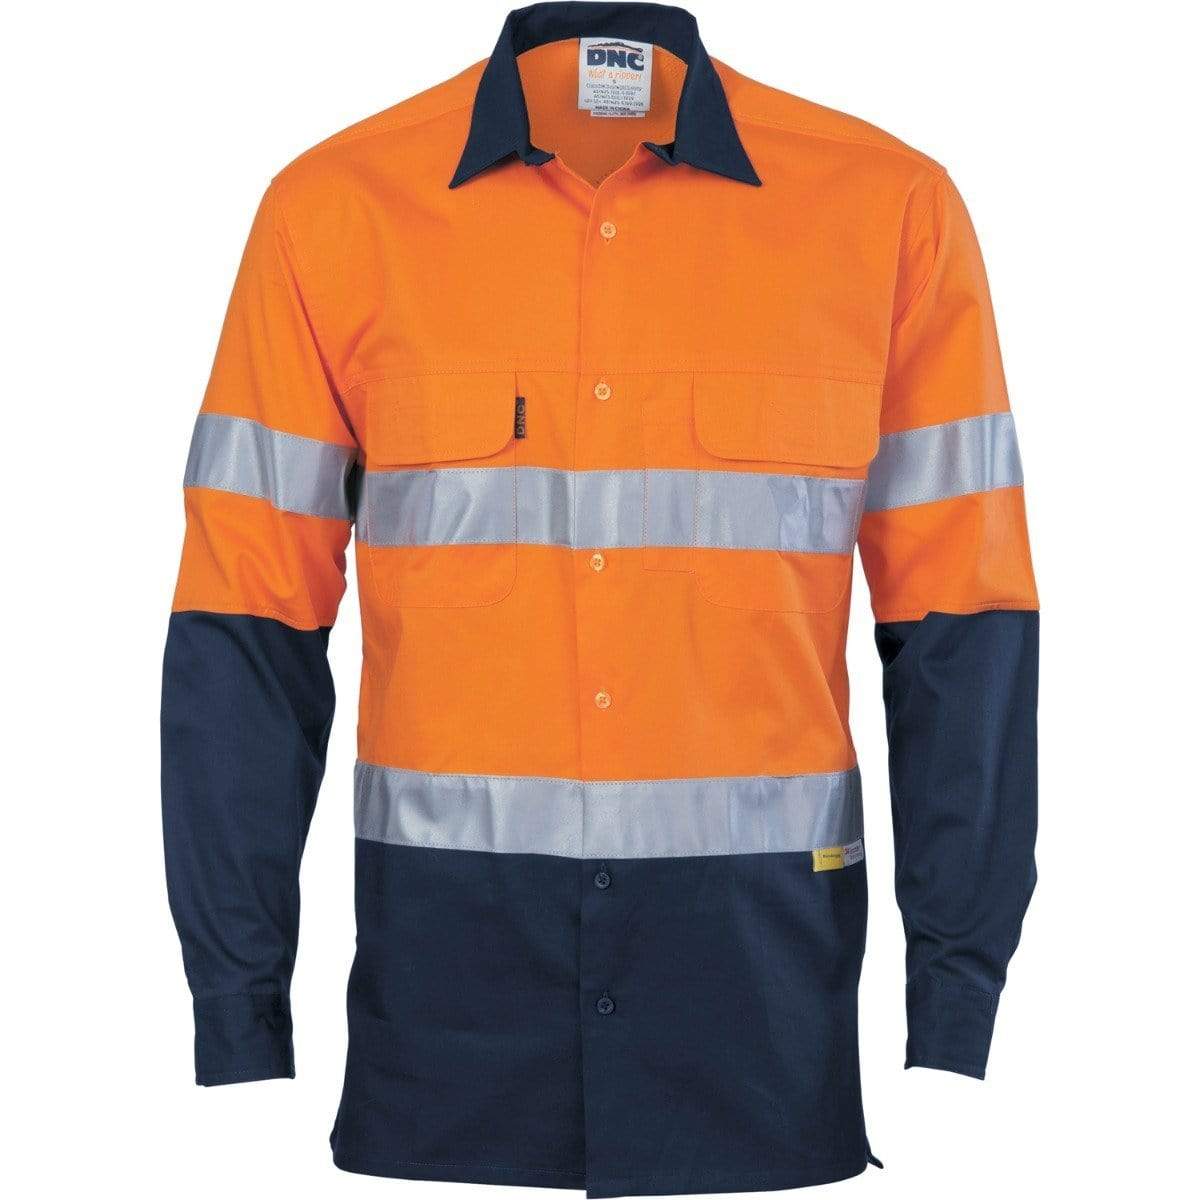 Dnc Workwear Hi-vis 3 Way Cool-breeze Long Sleeve Cotton Shirt With Csr Reflective Tape - 3948 Work Wear DNC Workwear Orange/Navy XS 